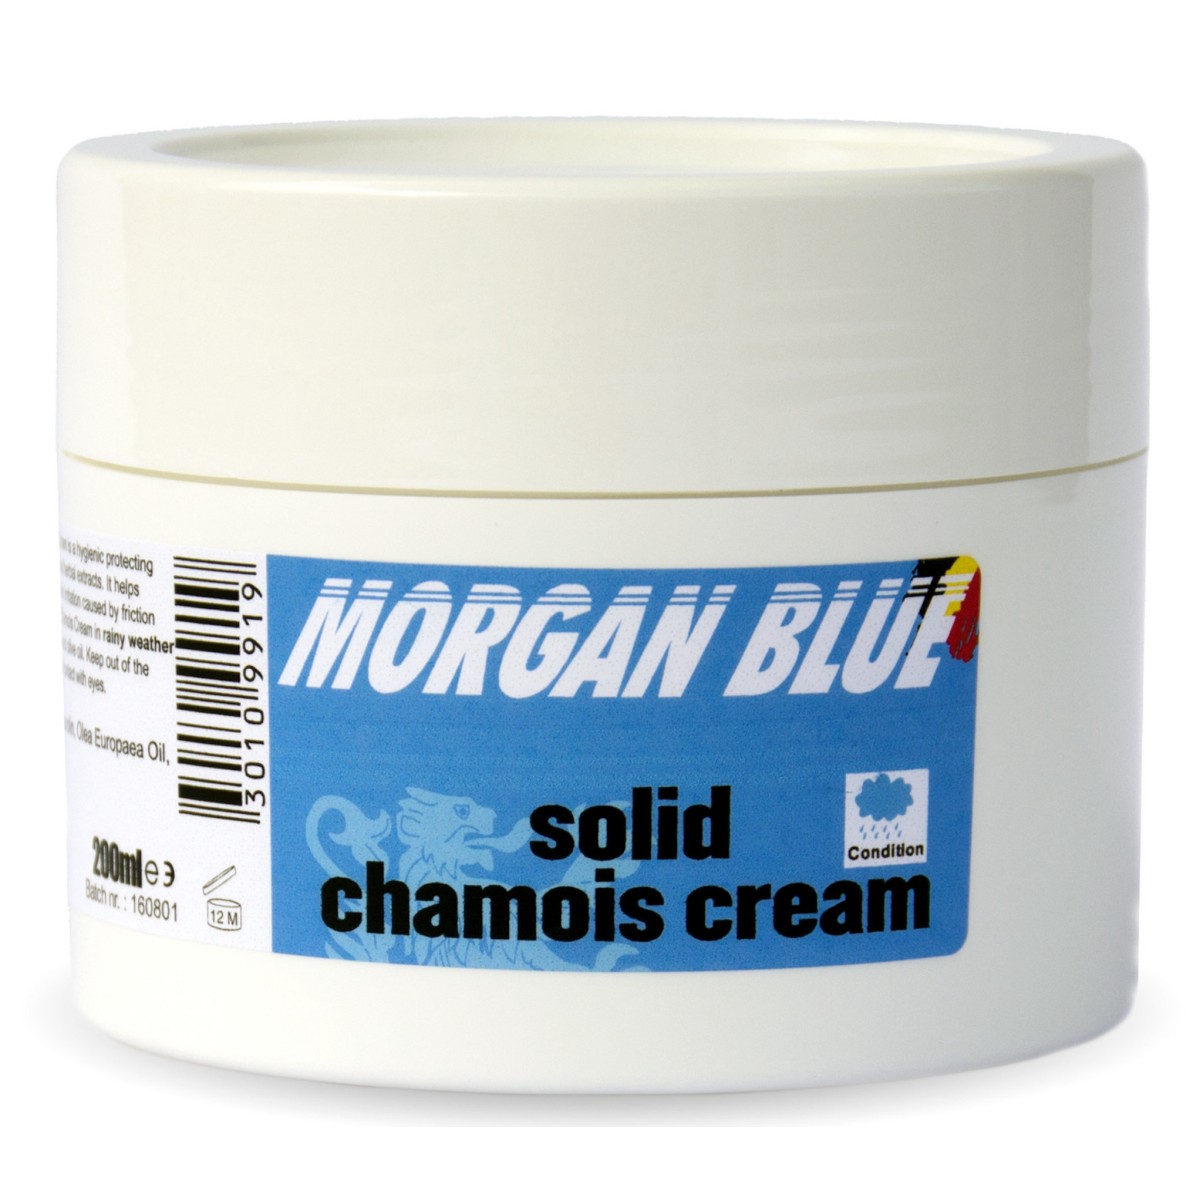 MORGAN BLUE SOLID CHAMOIS CREAM 200ML